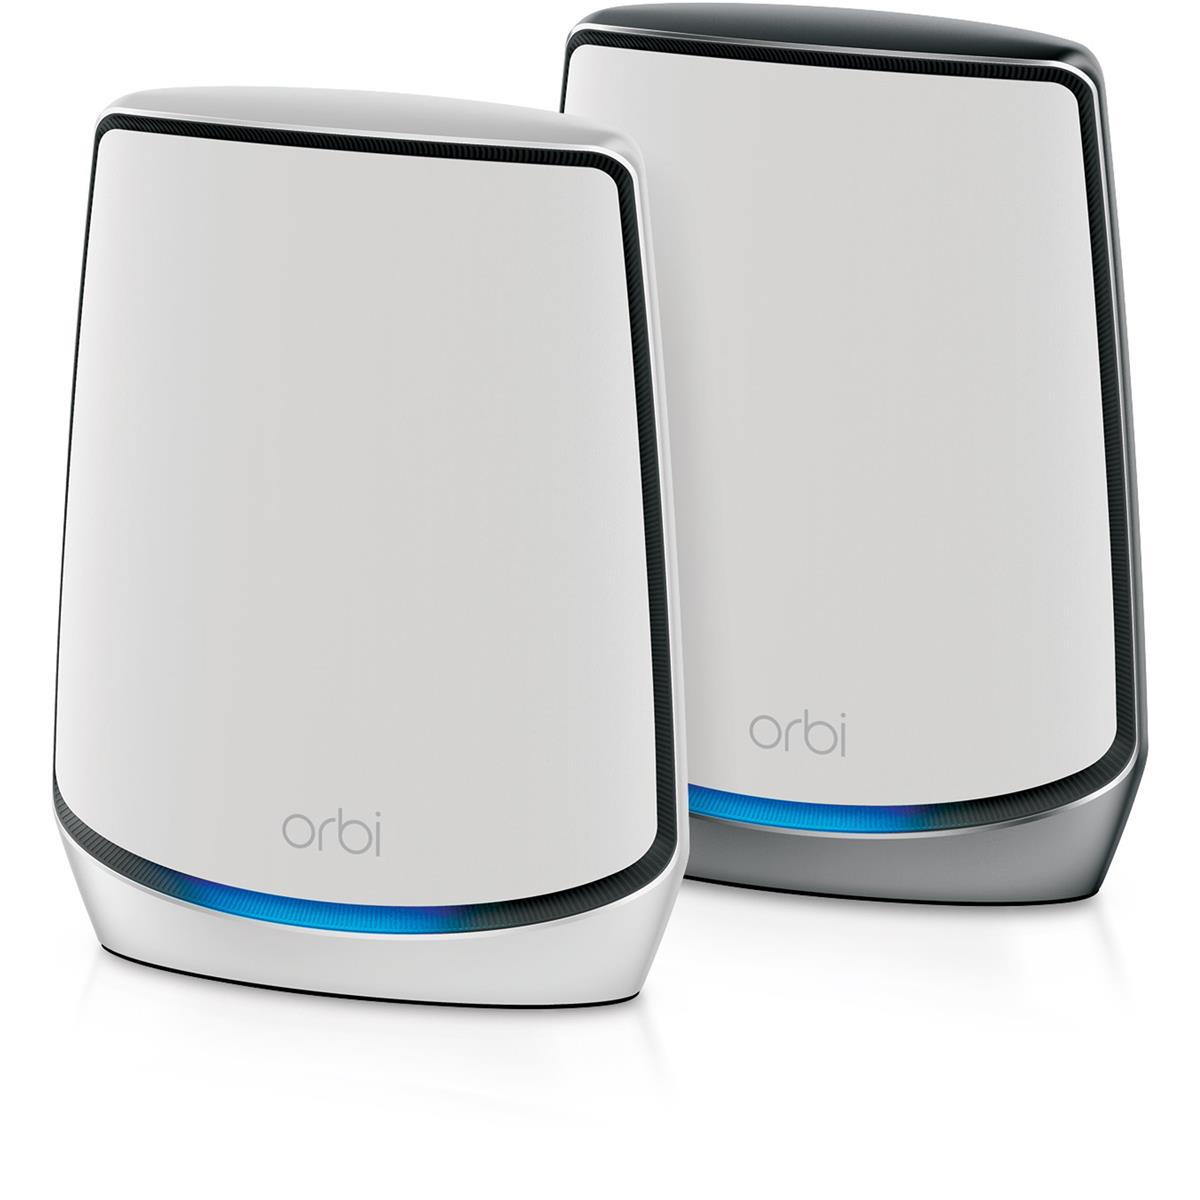 Image of Netgear Orbi Wi-Fi 6 AX6000 Whole Home Tri-Band Mesh Wi-Fi System